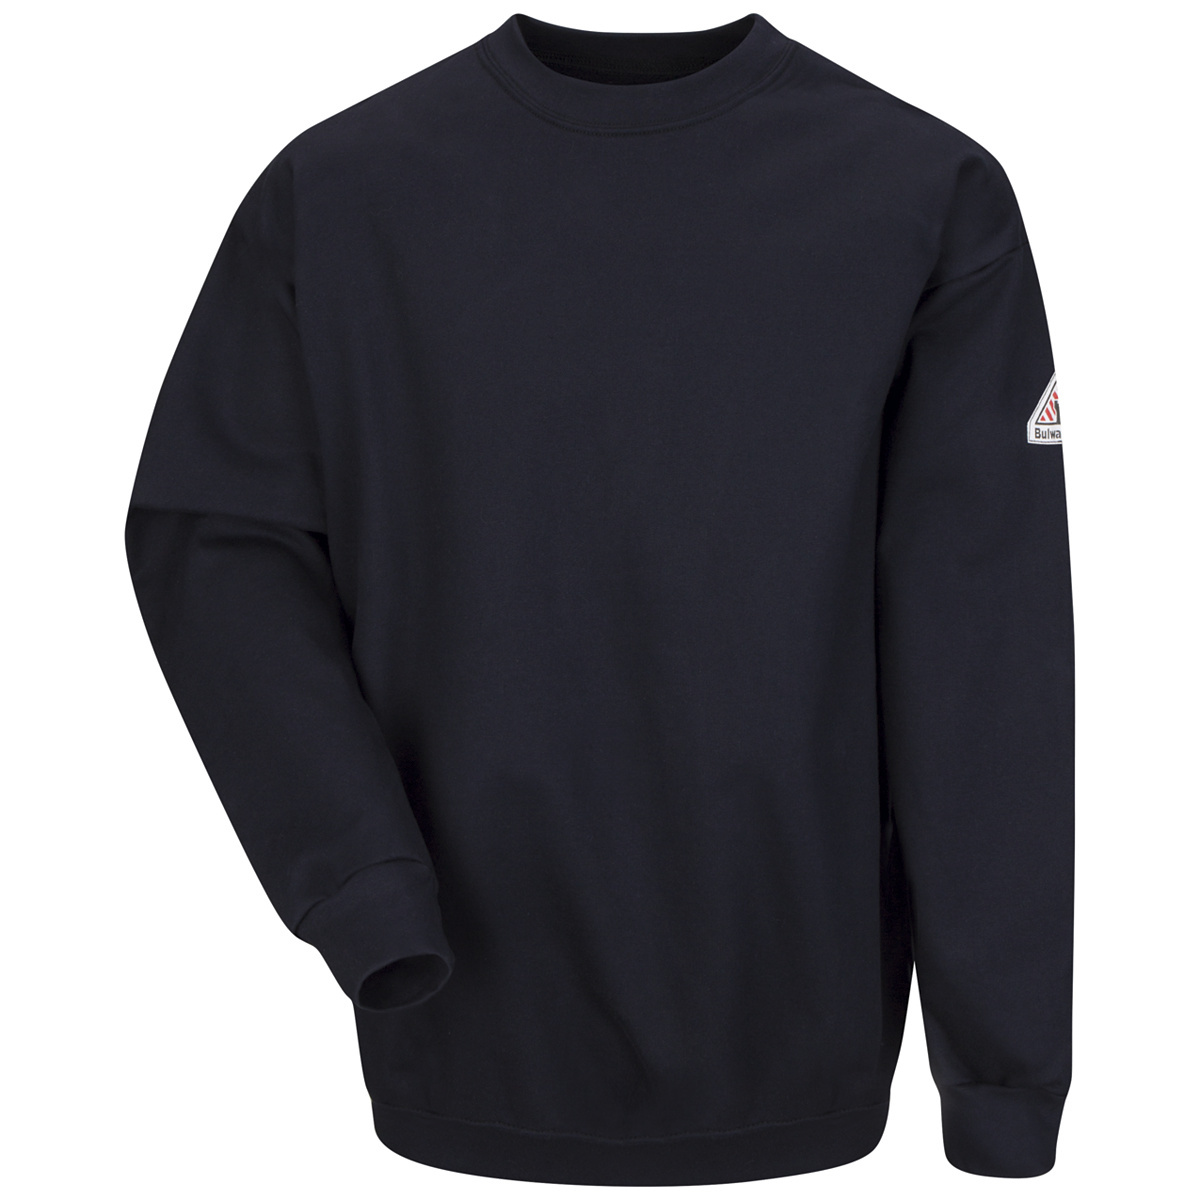 Bulwark® X-Large Tall Navy Blue Cotton/Spandex Brushed Fleece Flame Resistant Crew Neck Sweatshirt